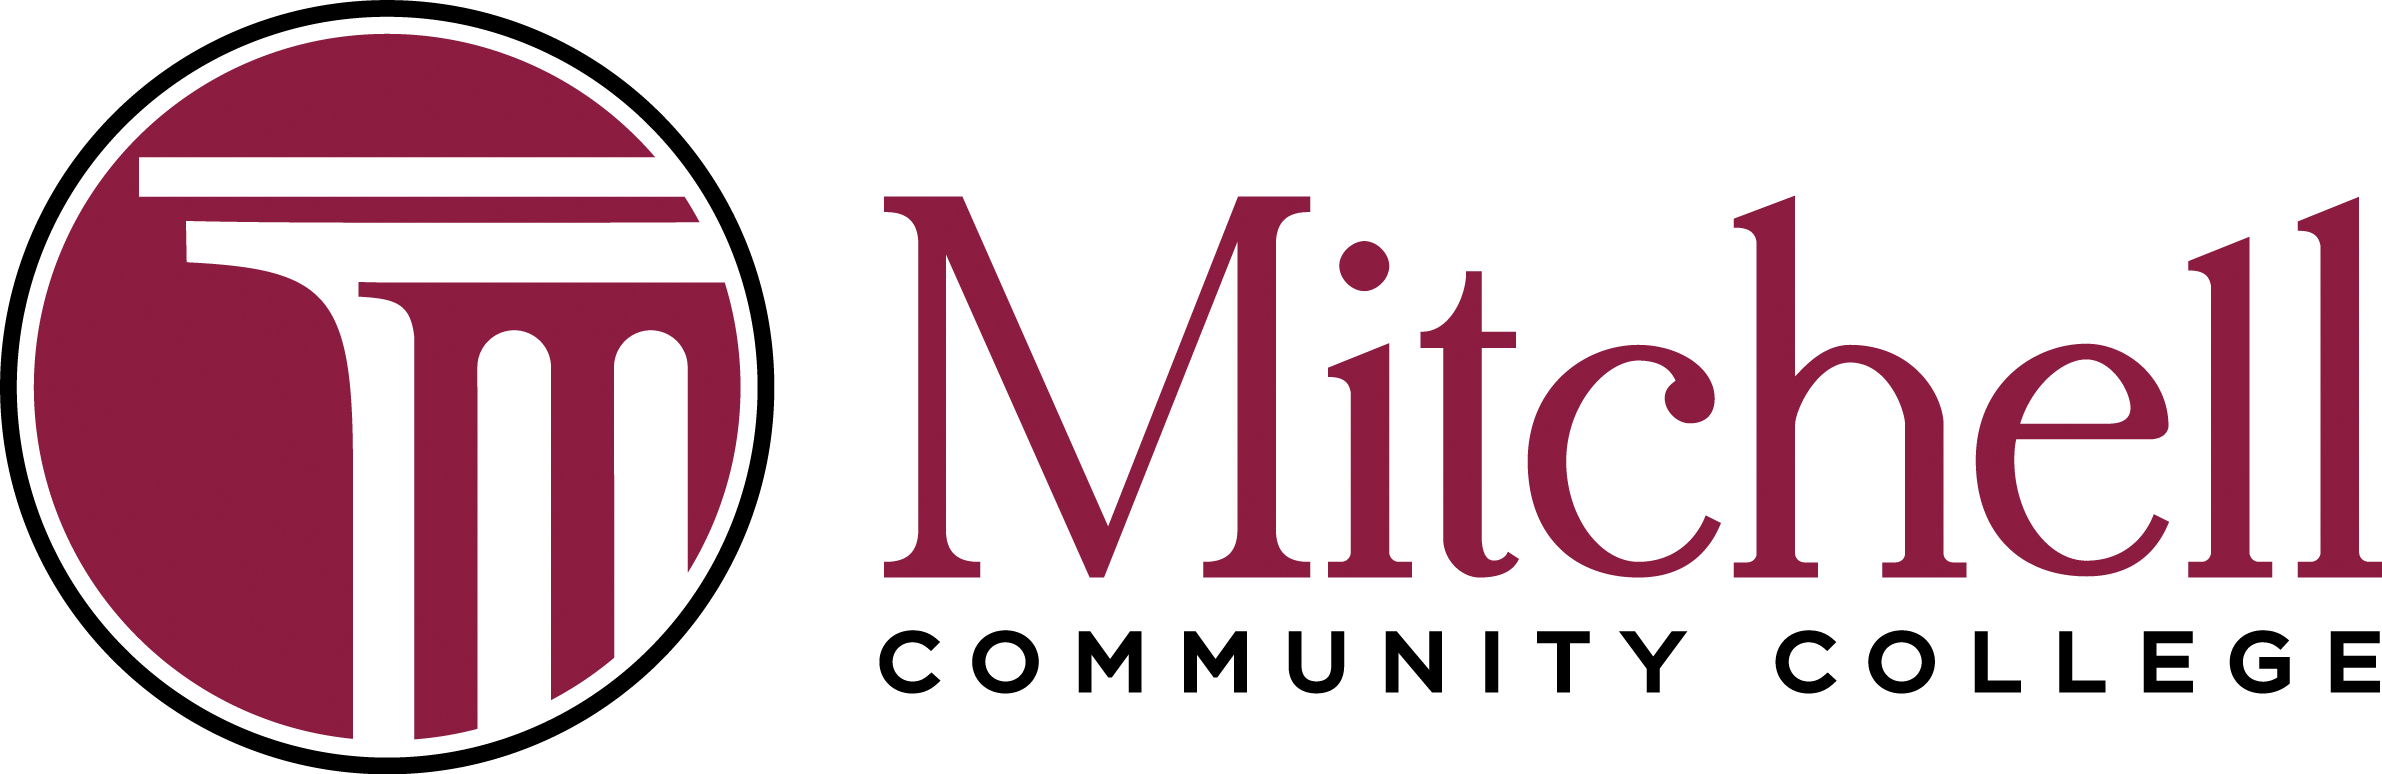 Logotipo burdeos horizontal de Mitchell Community College.